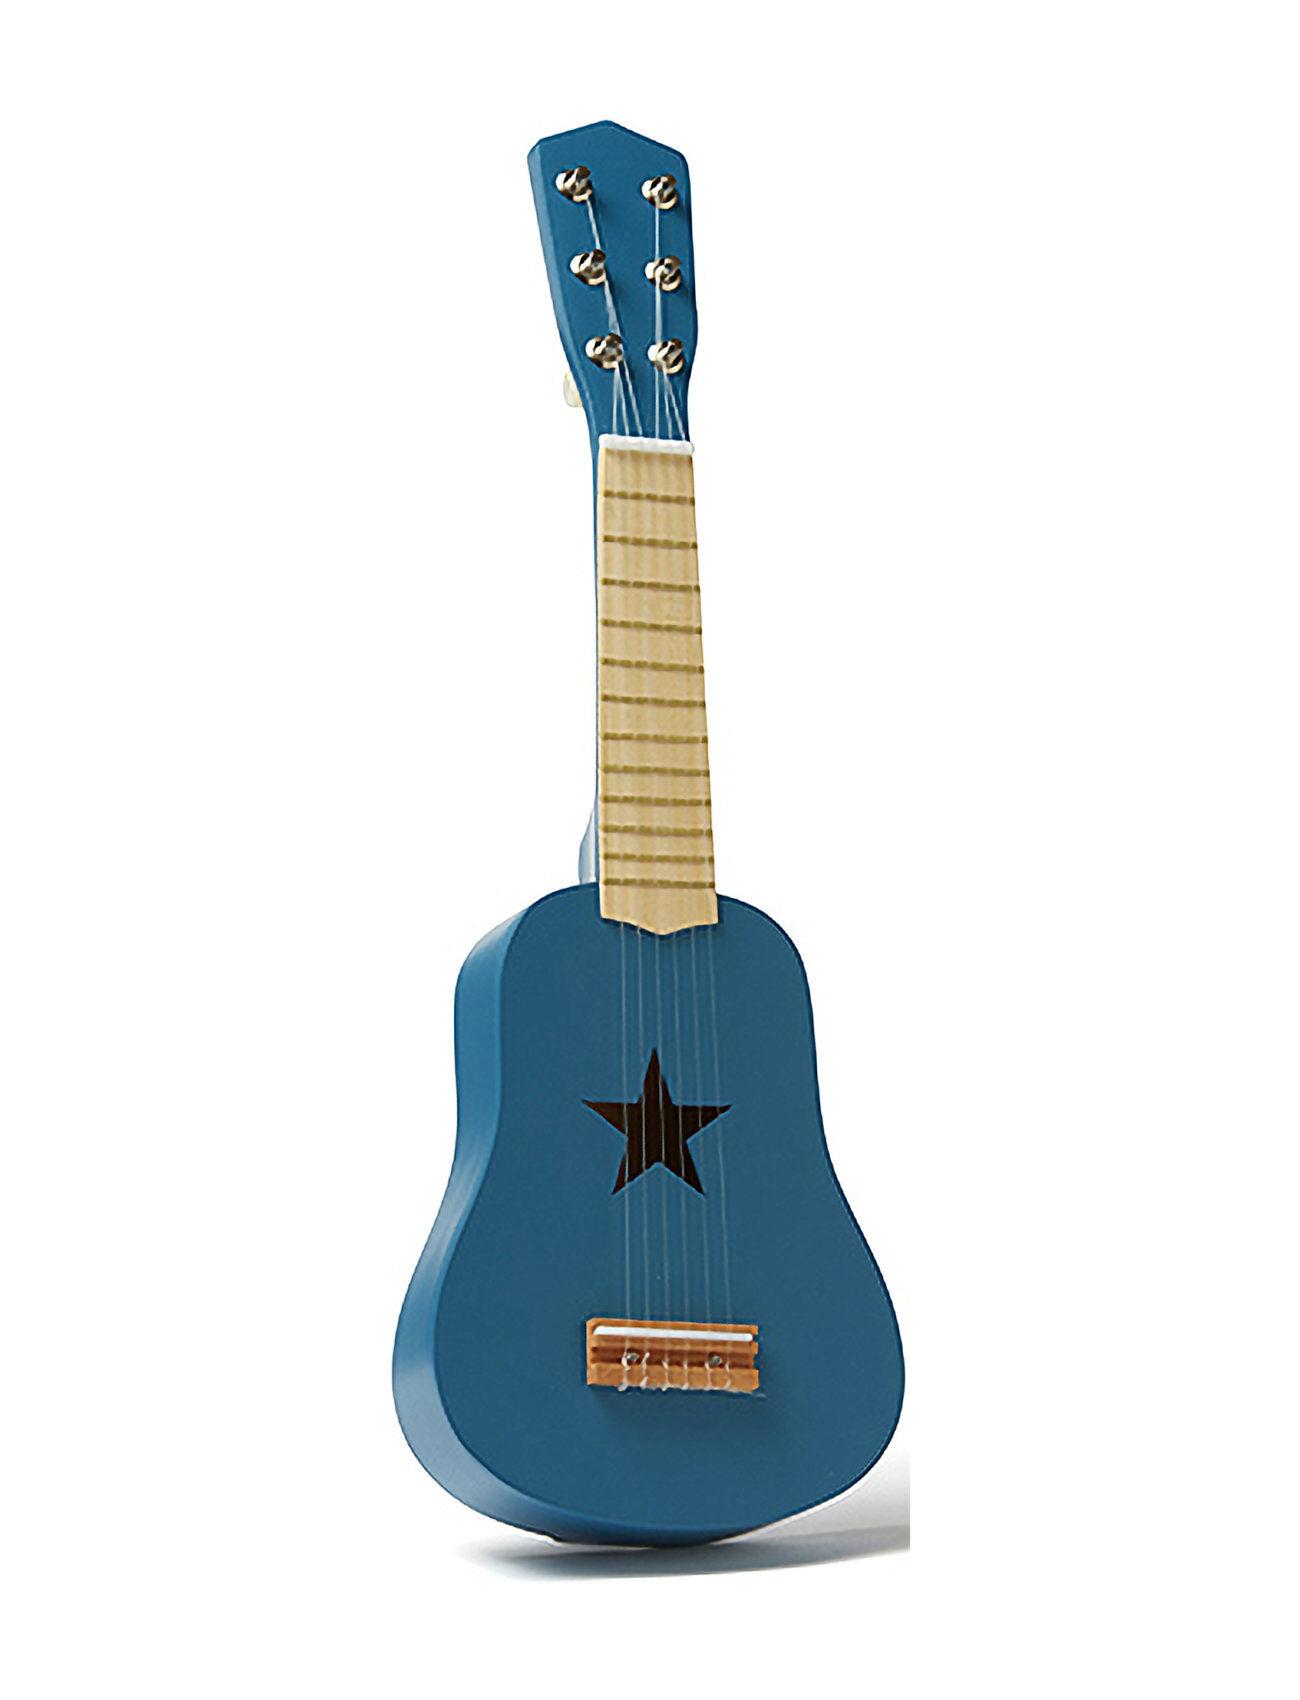 Kids Concept Guitar Blue Toys Musical Instruments Blå Kids Concept